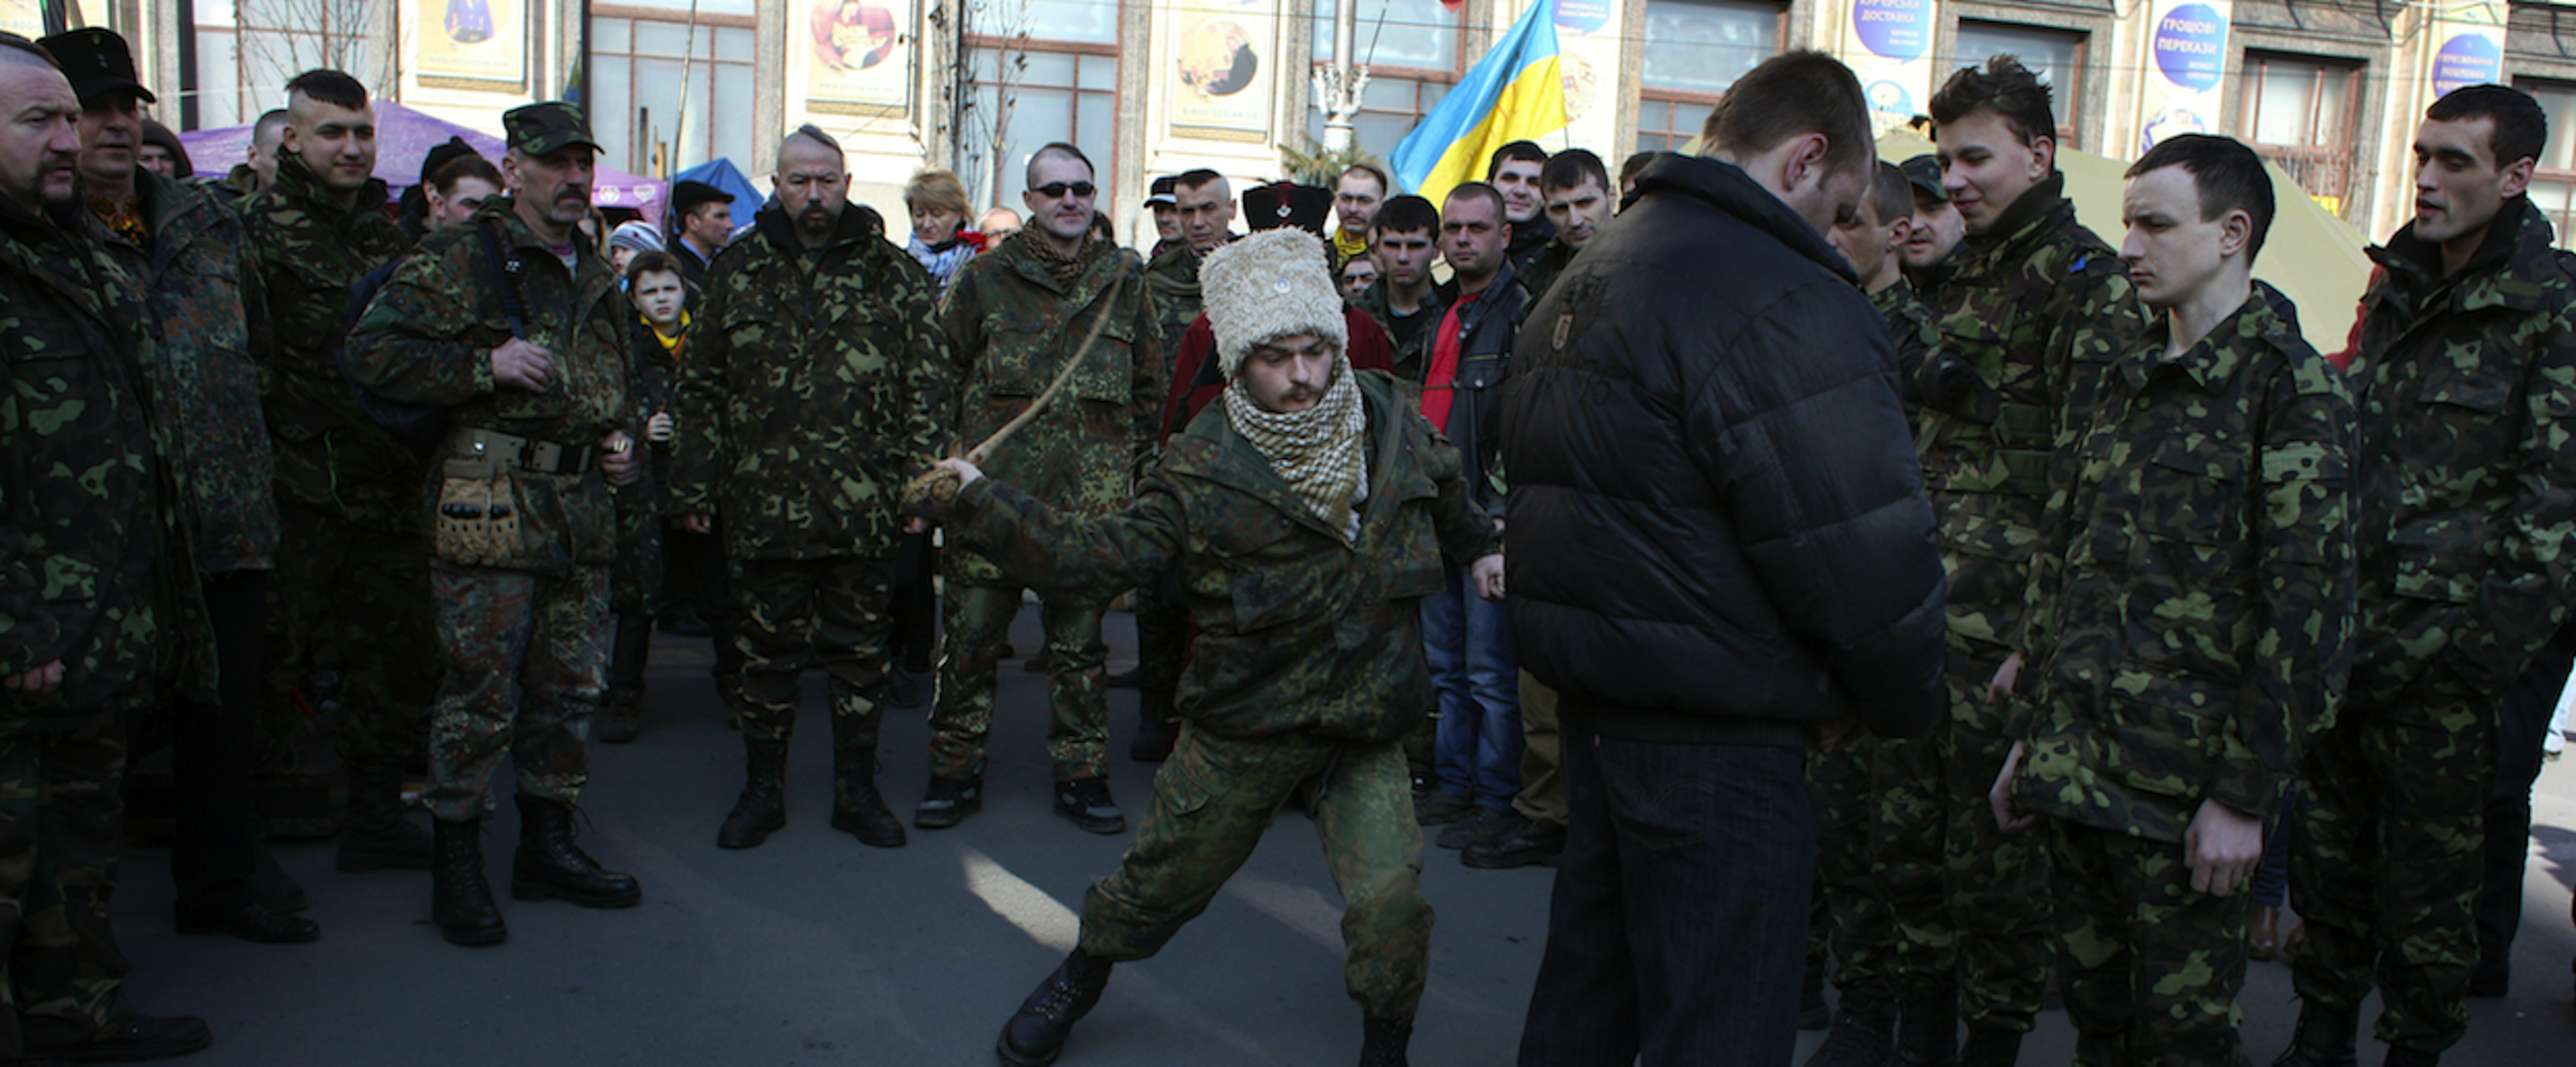 Ukraine Crisis News Roundup: March 10 | The New Republic